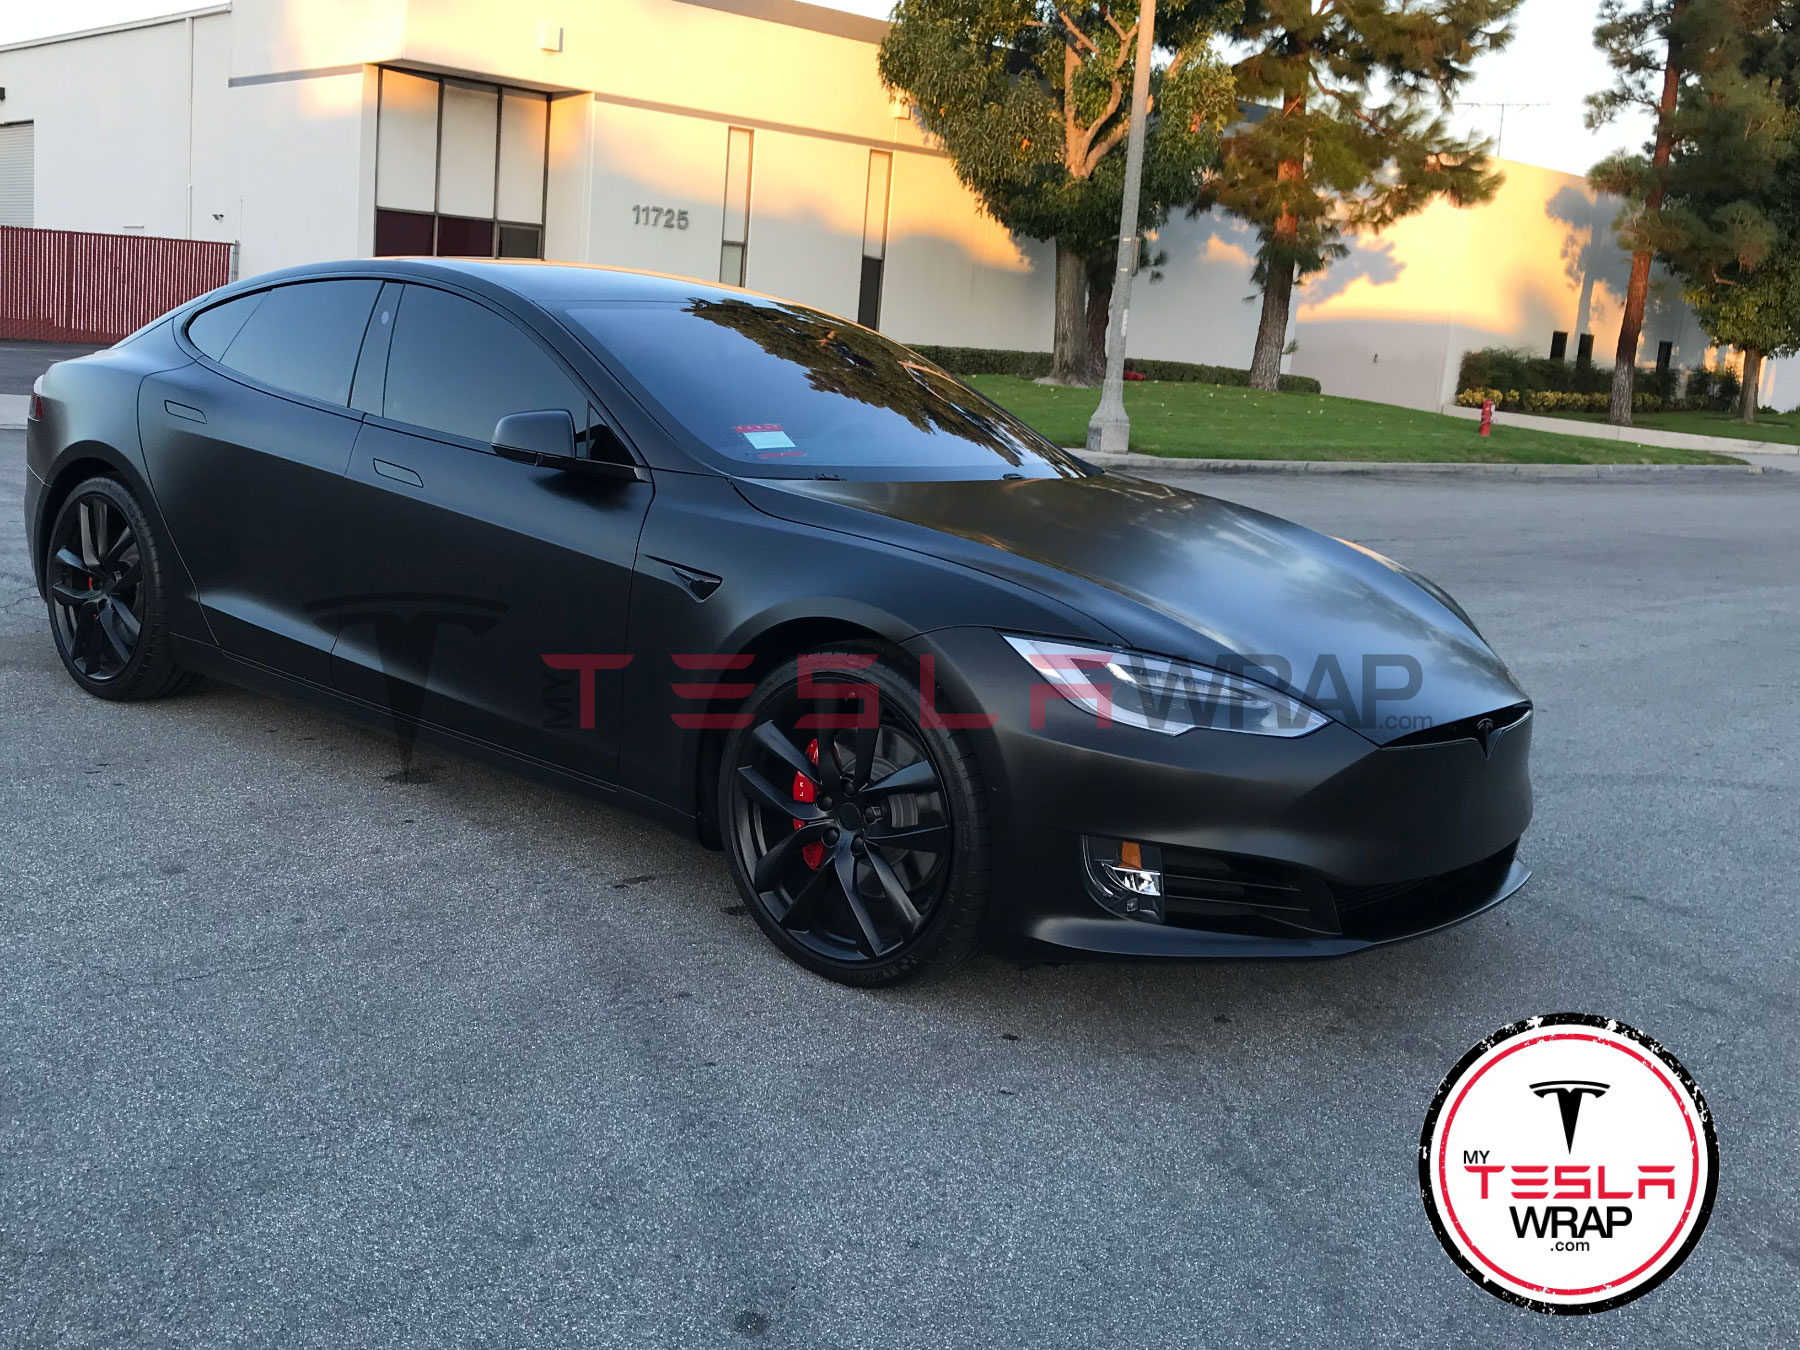 Tesla Model S wrapped